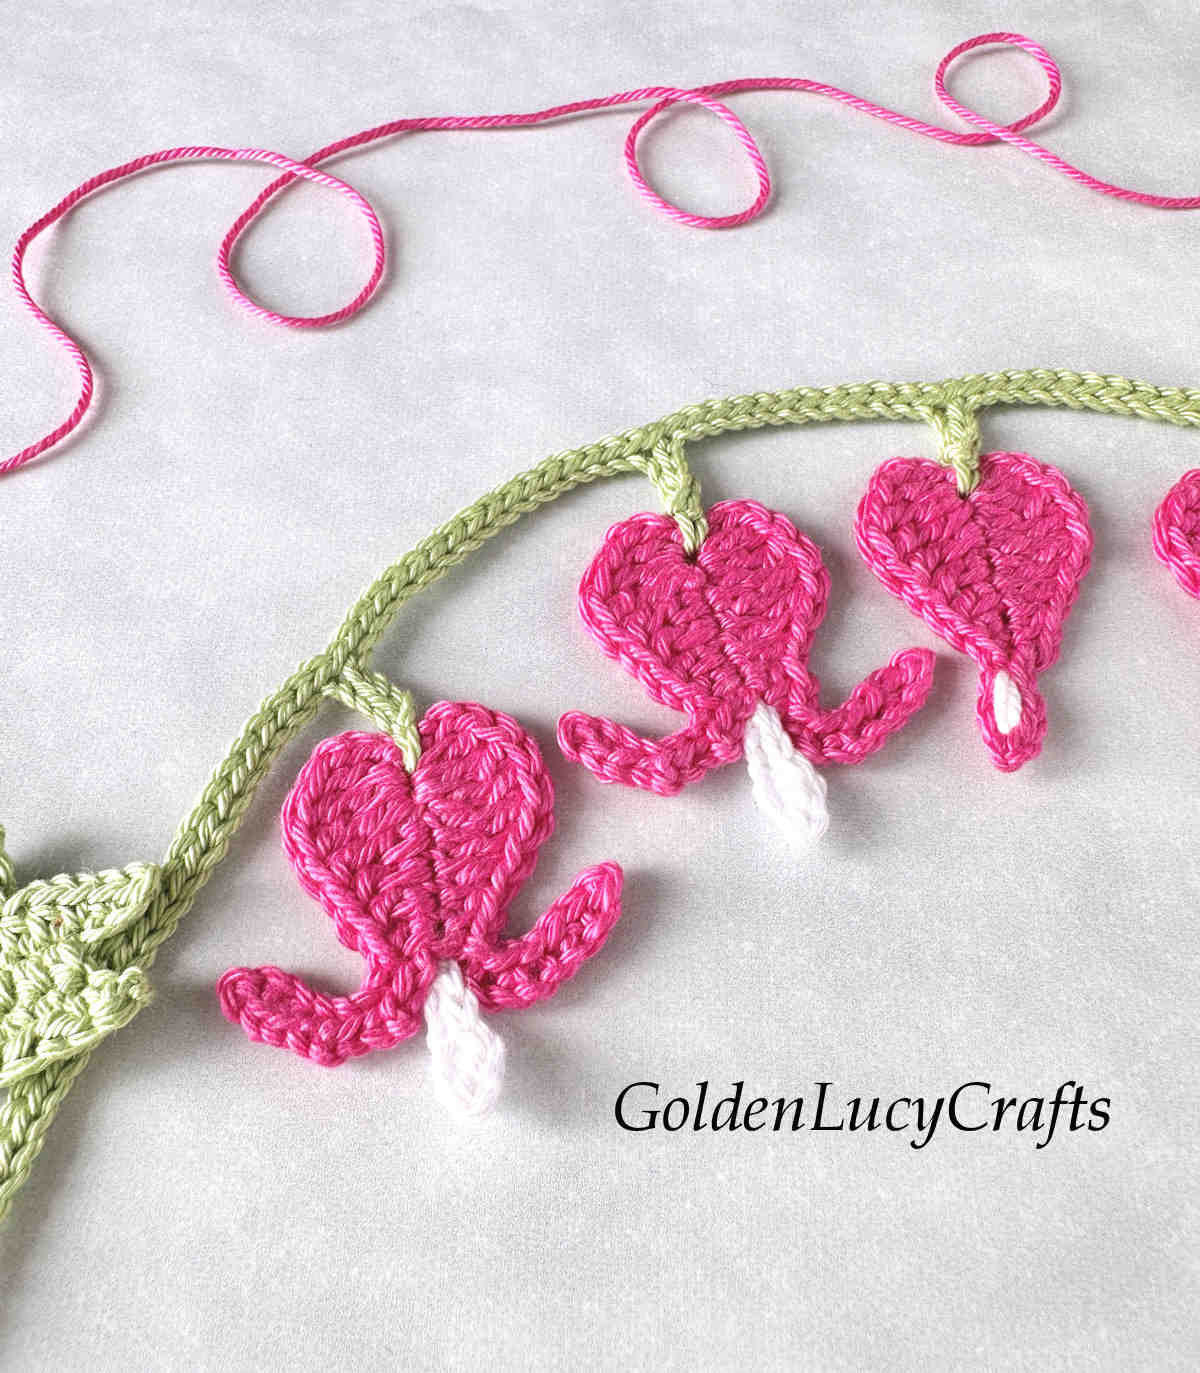 Crochet bleeding heart applique close-up picture.